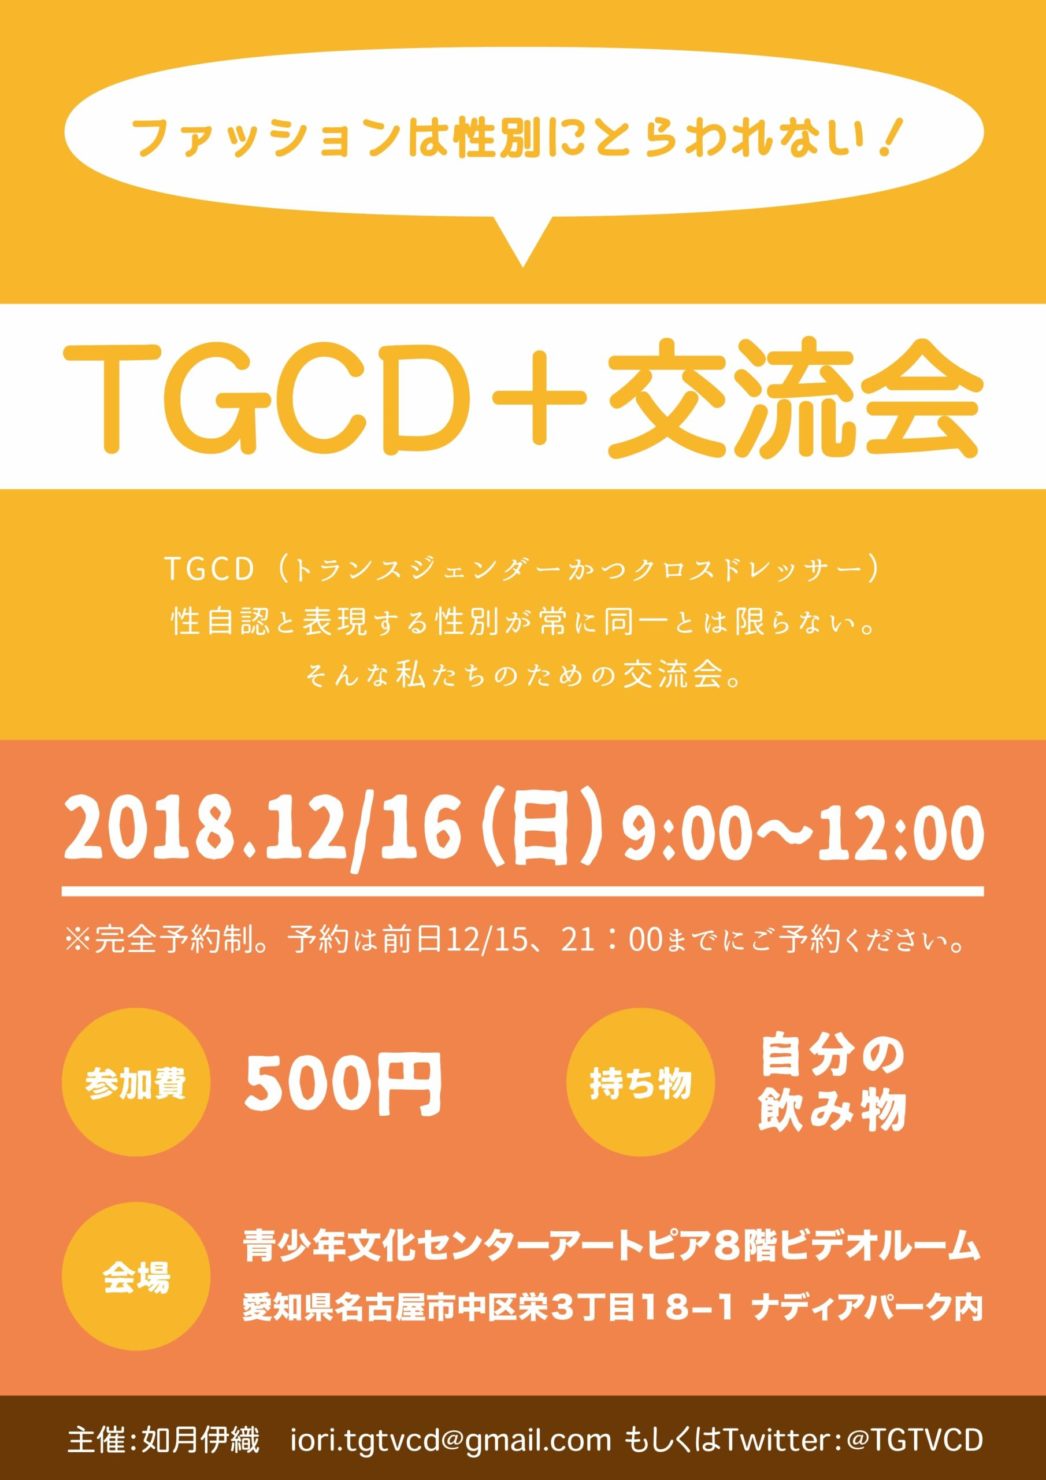 TGCD+交流会 さま チラシ